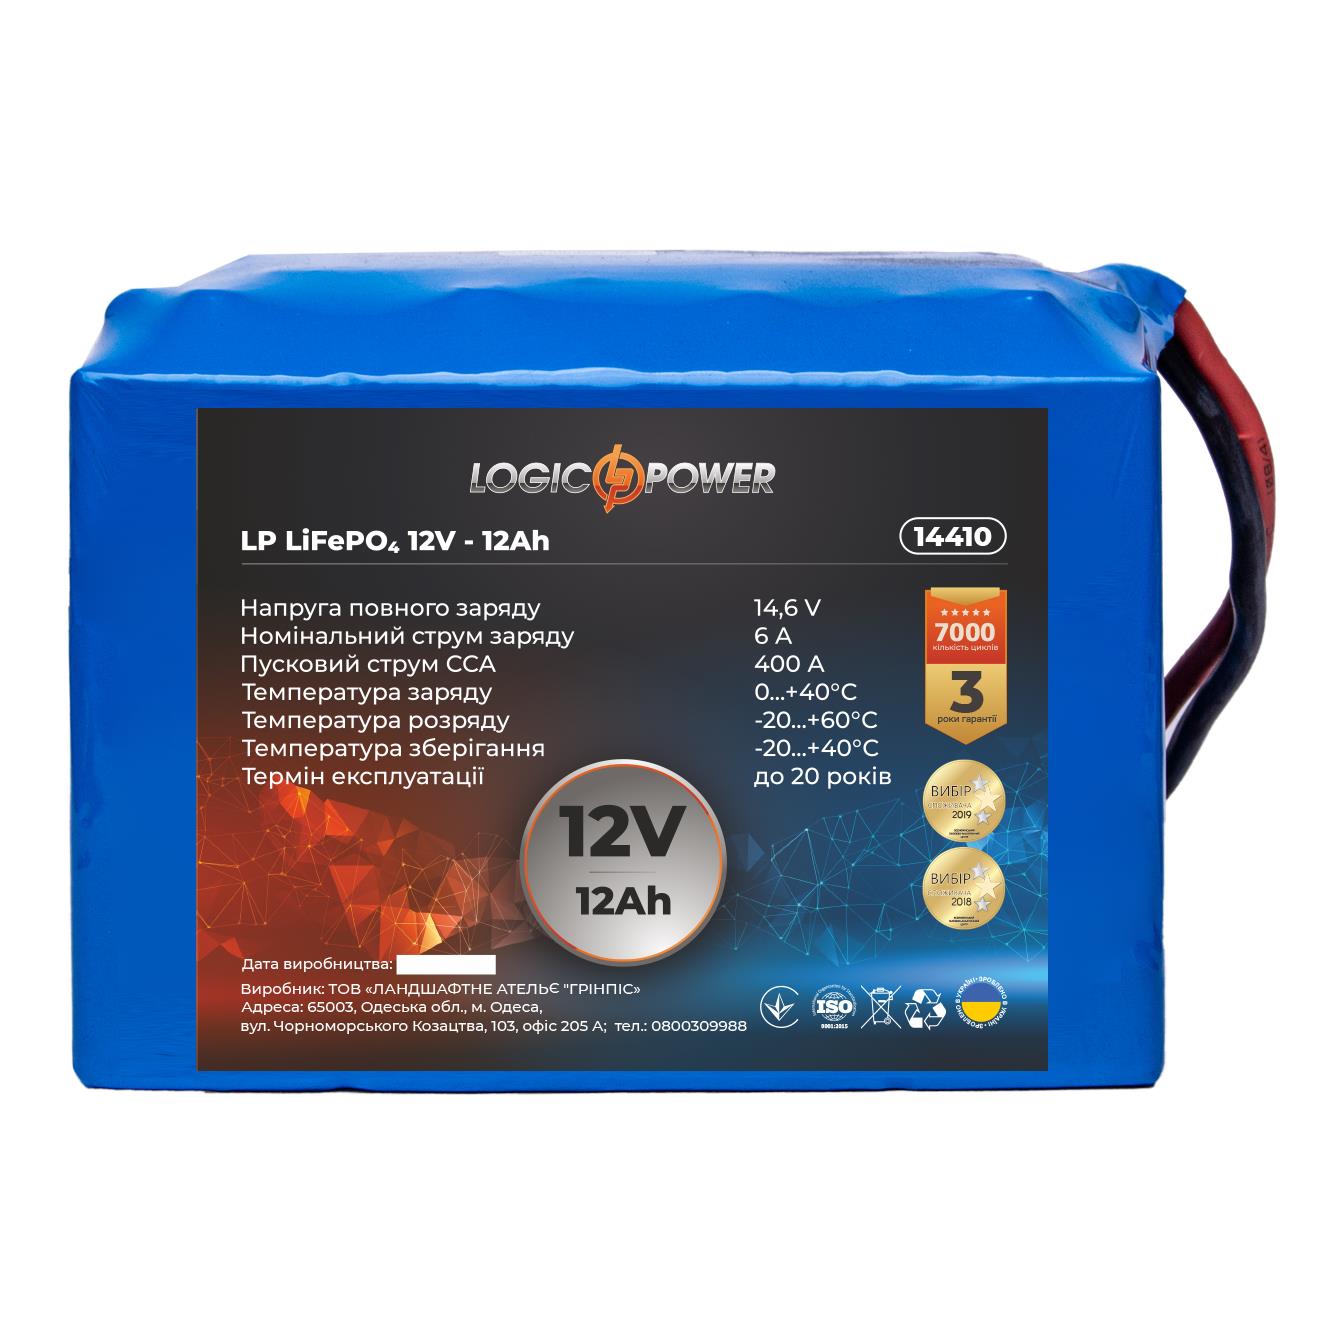 Акумулятор 12 A·h LogicPower LP LiFePO4 12V - 12 Ah для мопеда (14410)